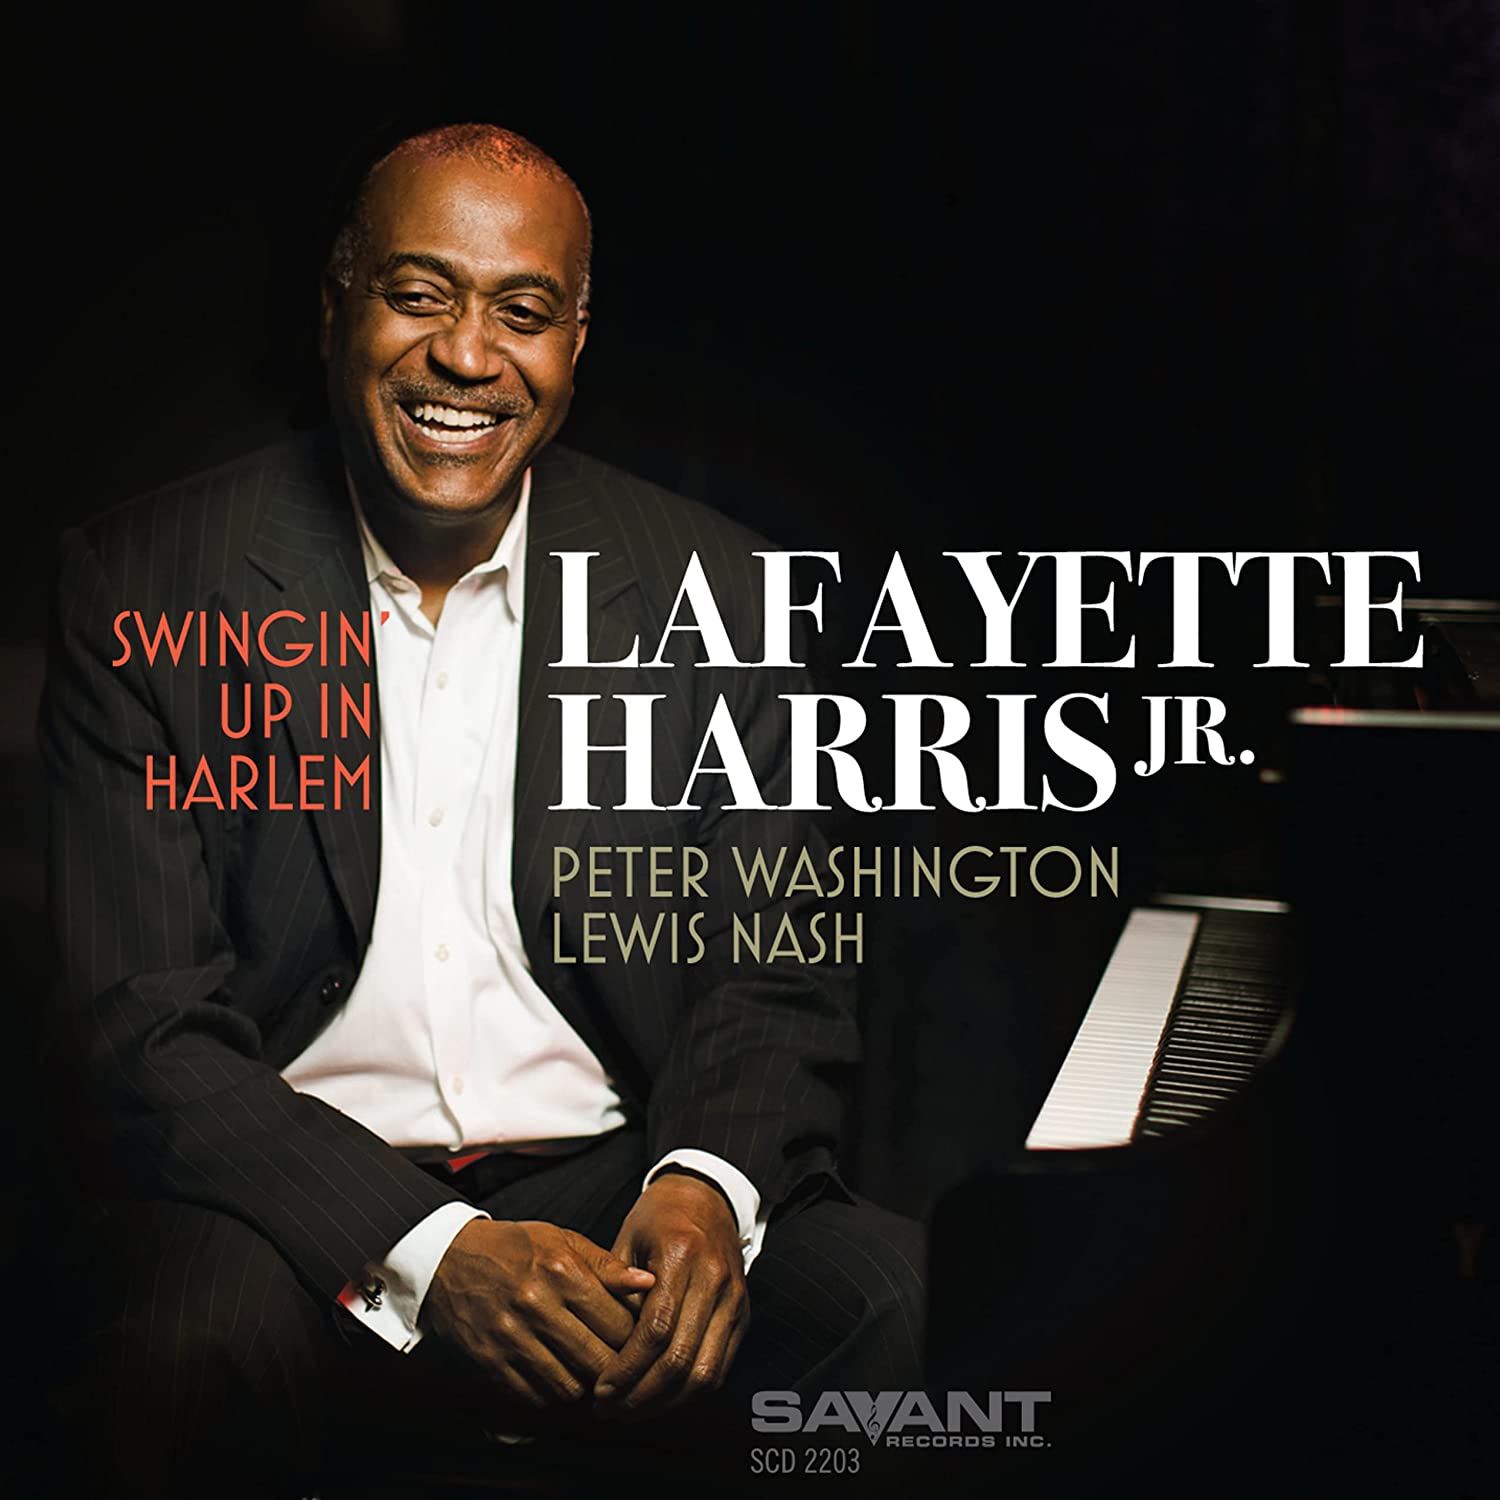 LAFAYETTE HARRIS JR - Swingin' Up in Harlem cover 